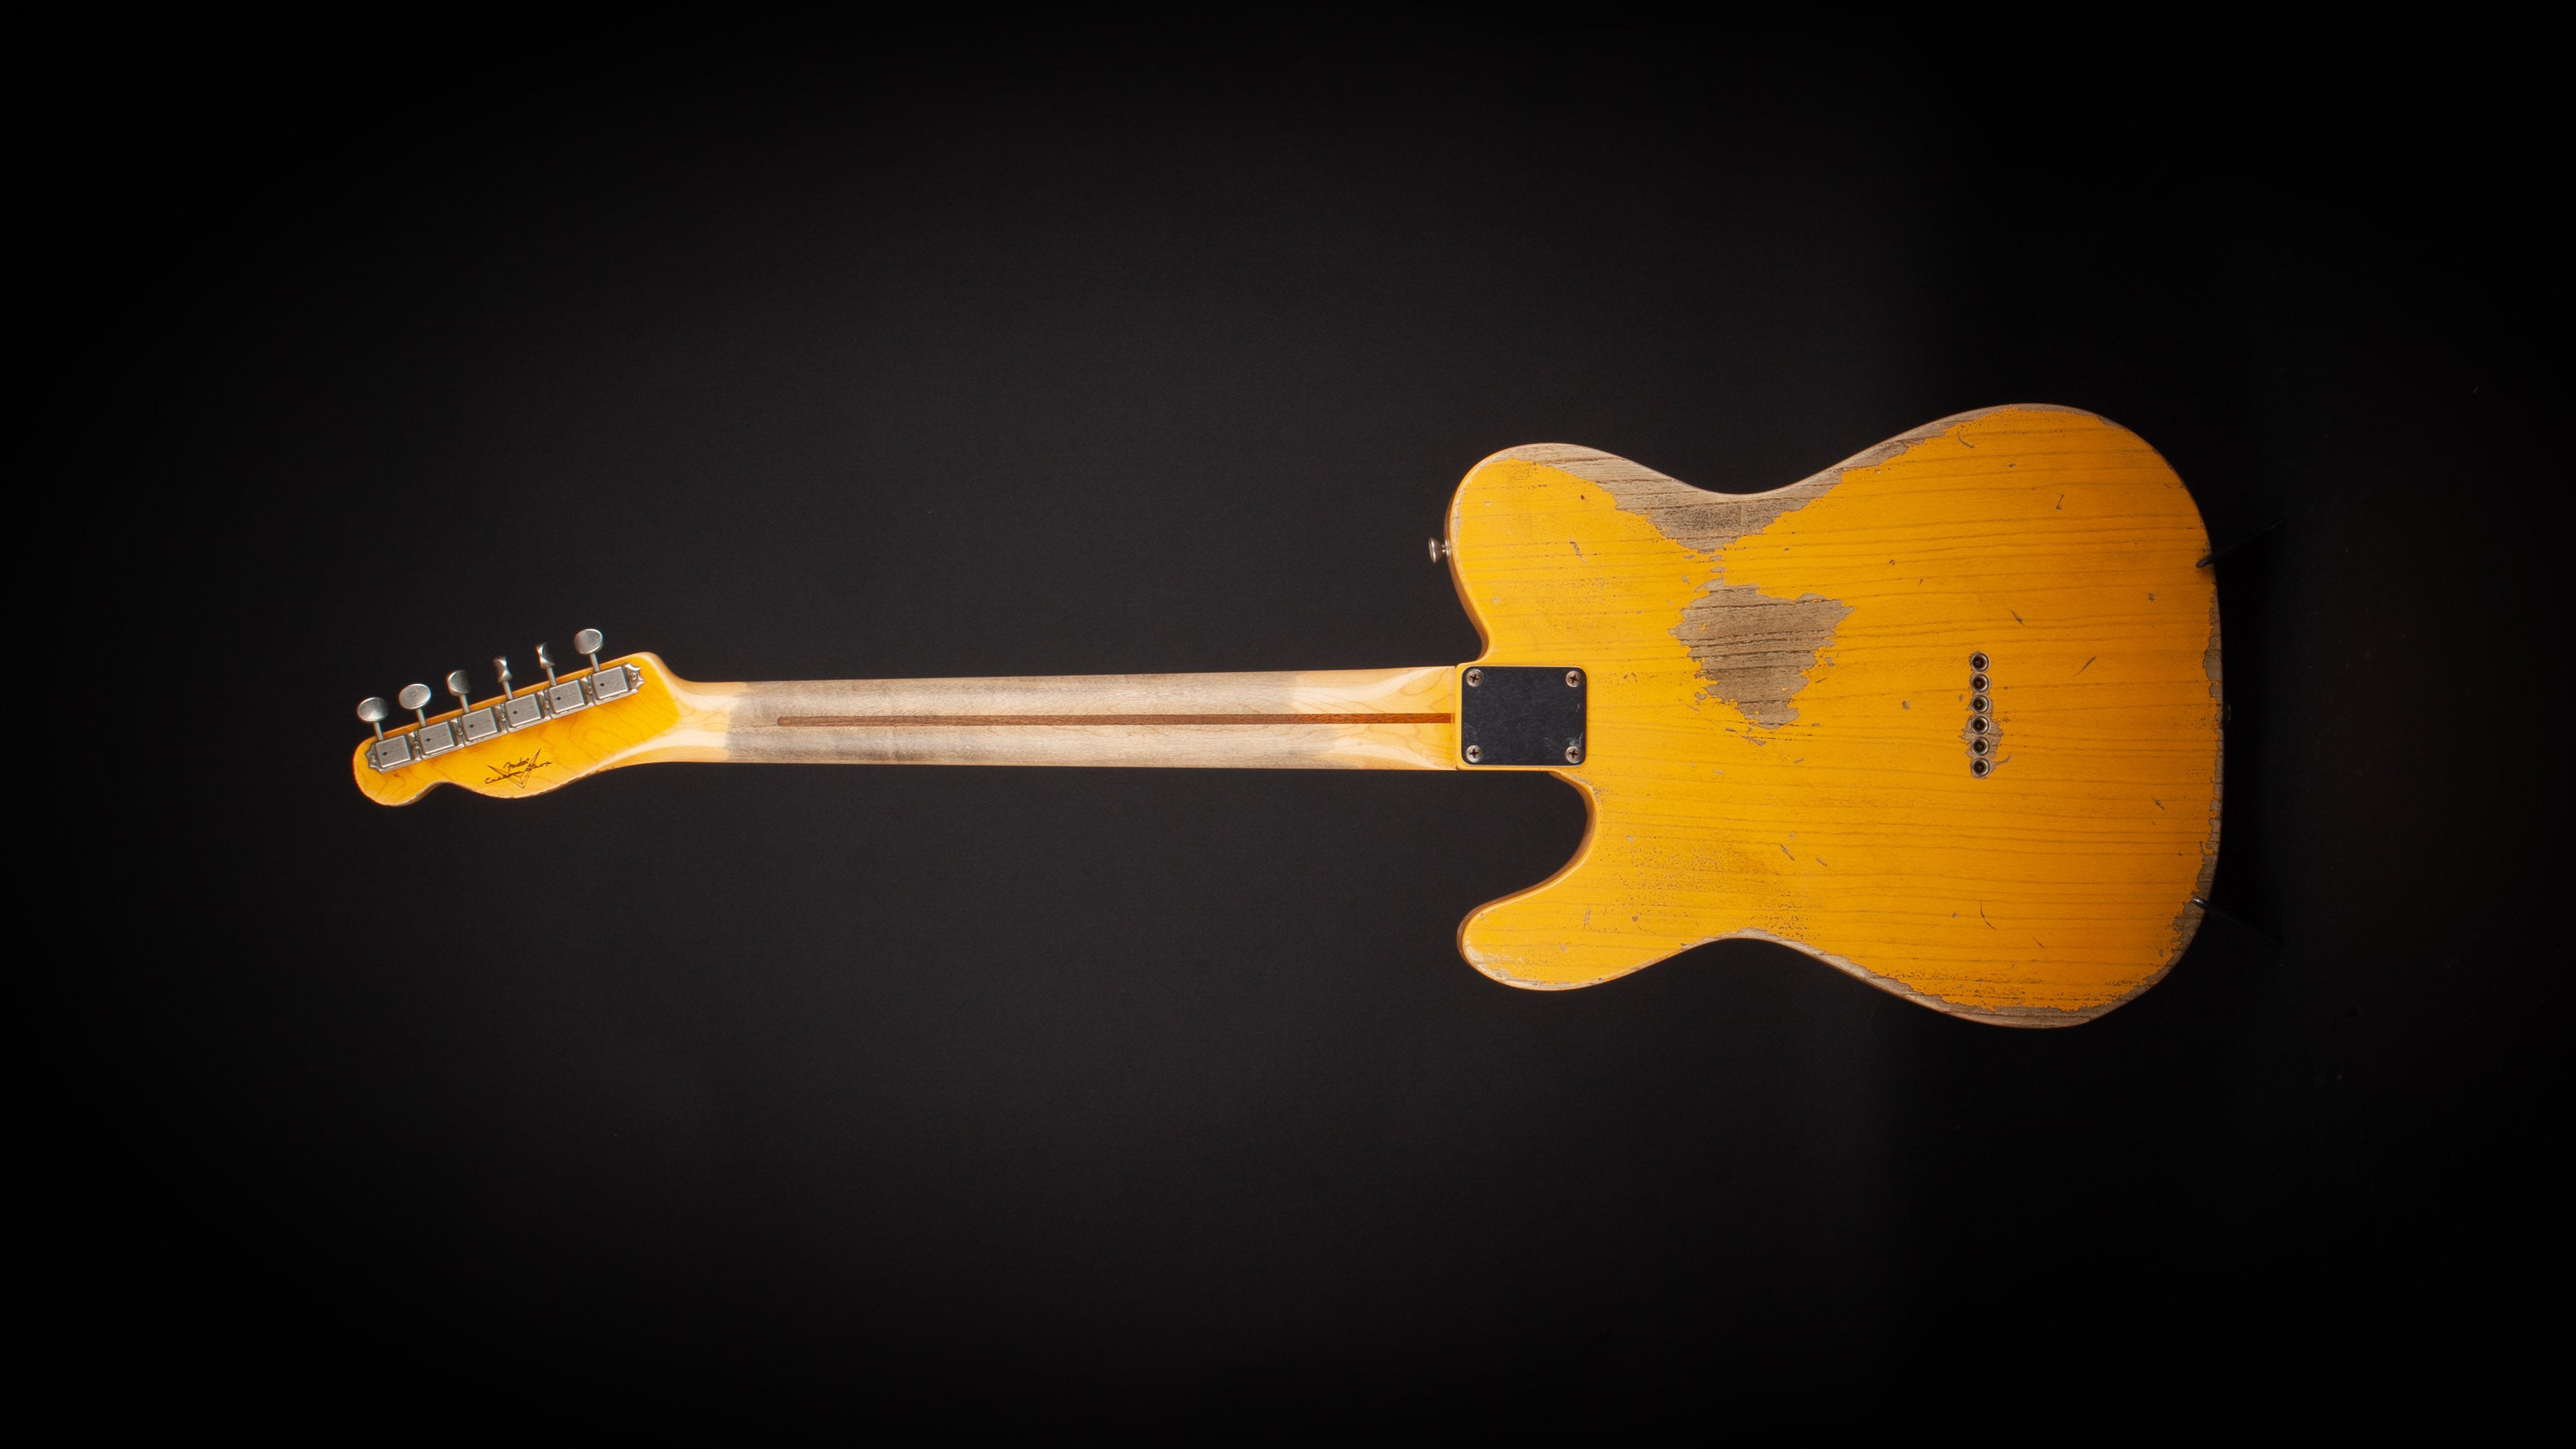 Fender Custom Shop 52 Telecaster Heavy Relic Butterscotch Blonde #R16756